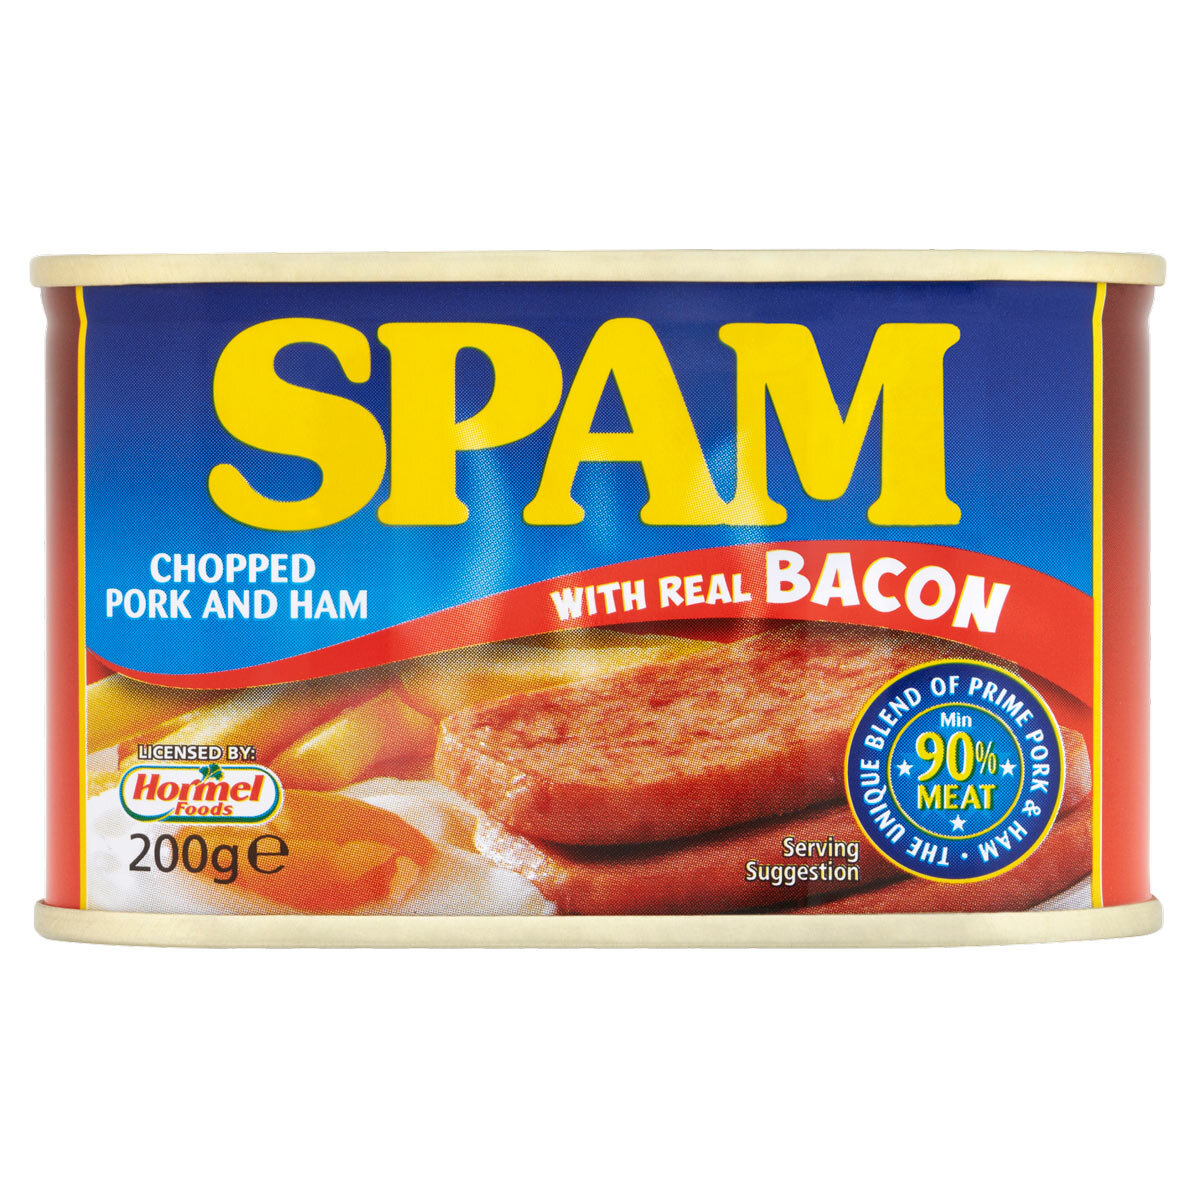 Spam Chopped Pork, Ham & Bacon, 200g